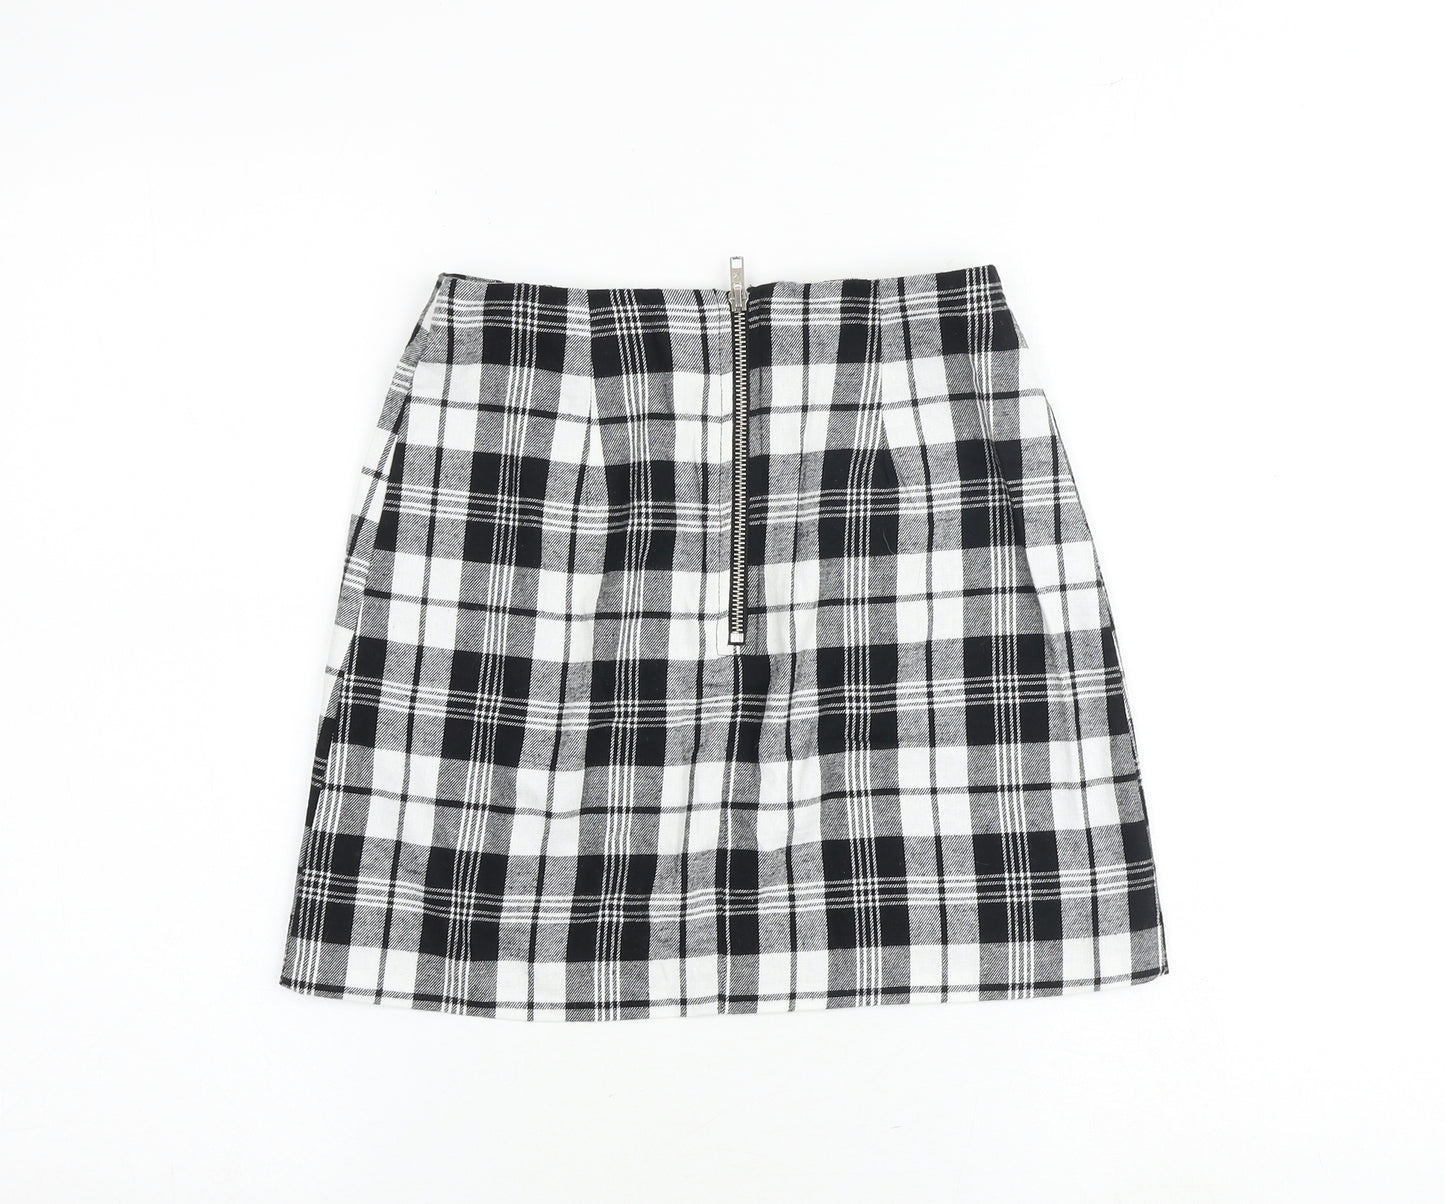 ASOS Womens Multicoloured Plaid Cotton A-Line Skirt Size 4 Zip